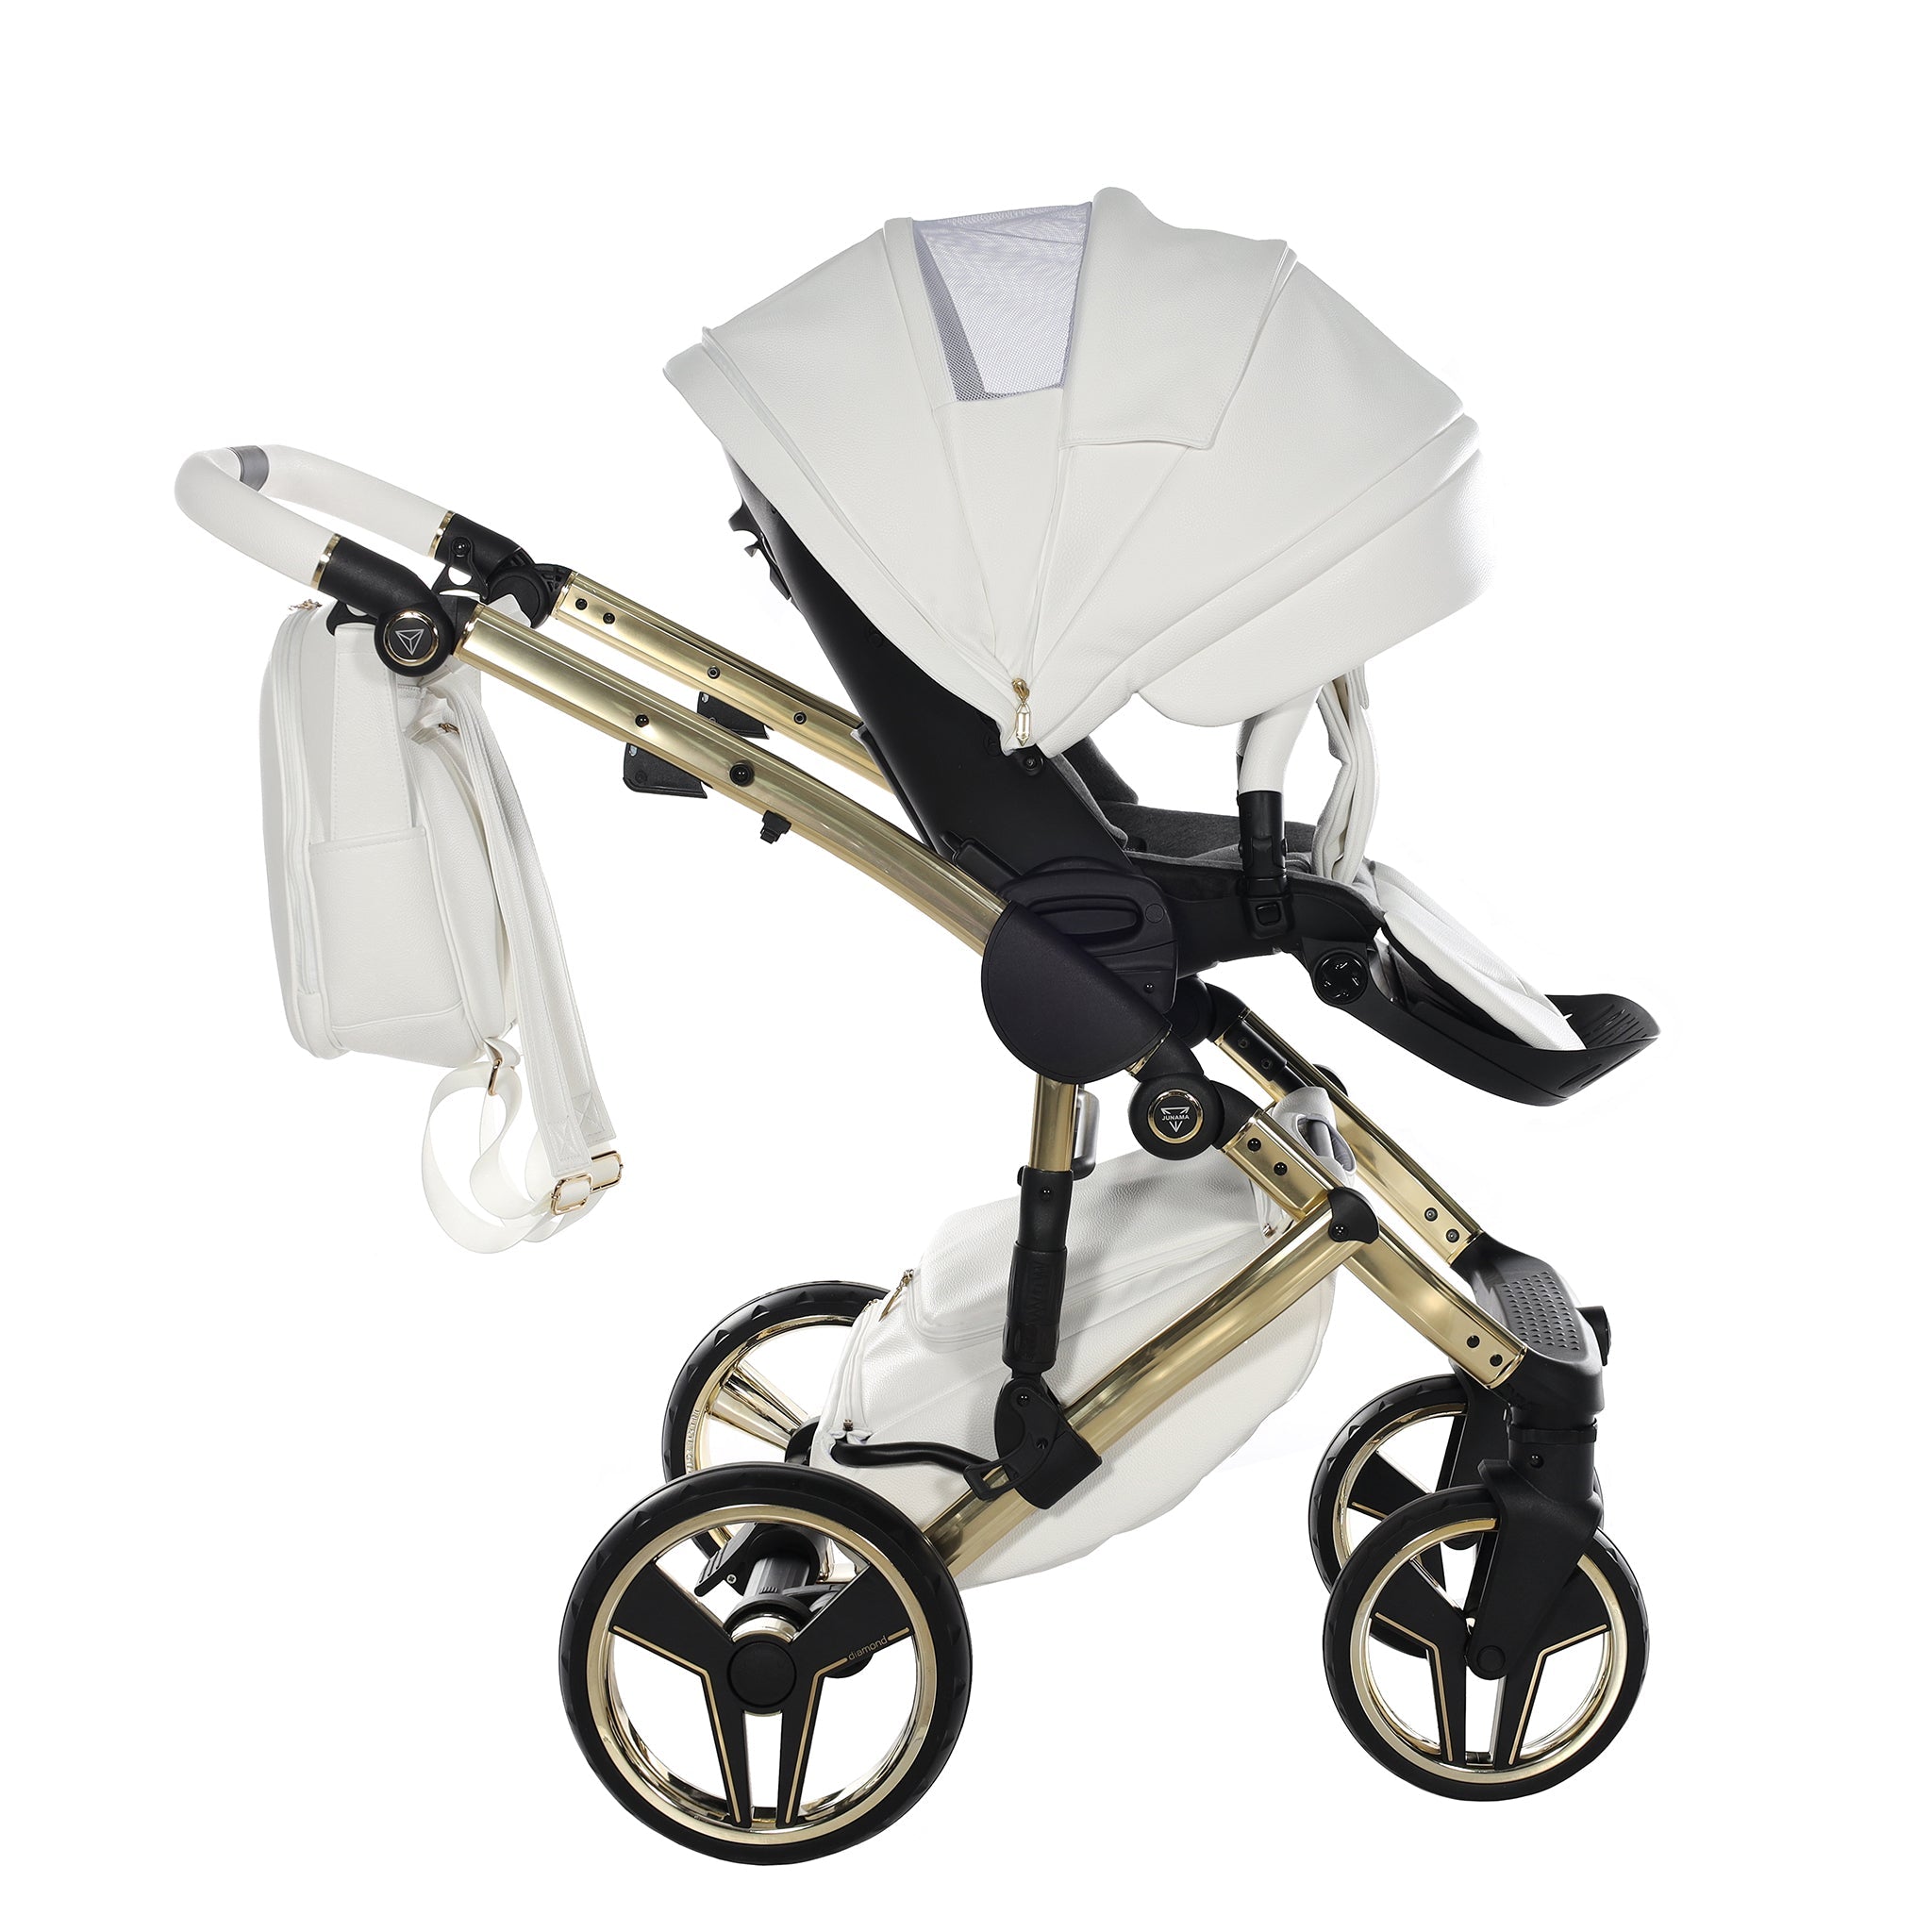 Junama Handcraft, baby prams or stroller 2 in 1 - White and Gold, number: JUNHC08